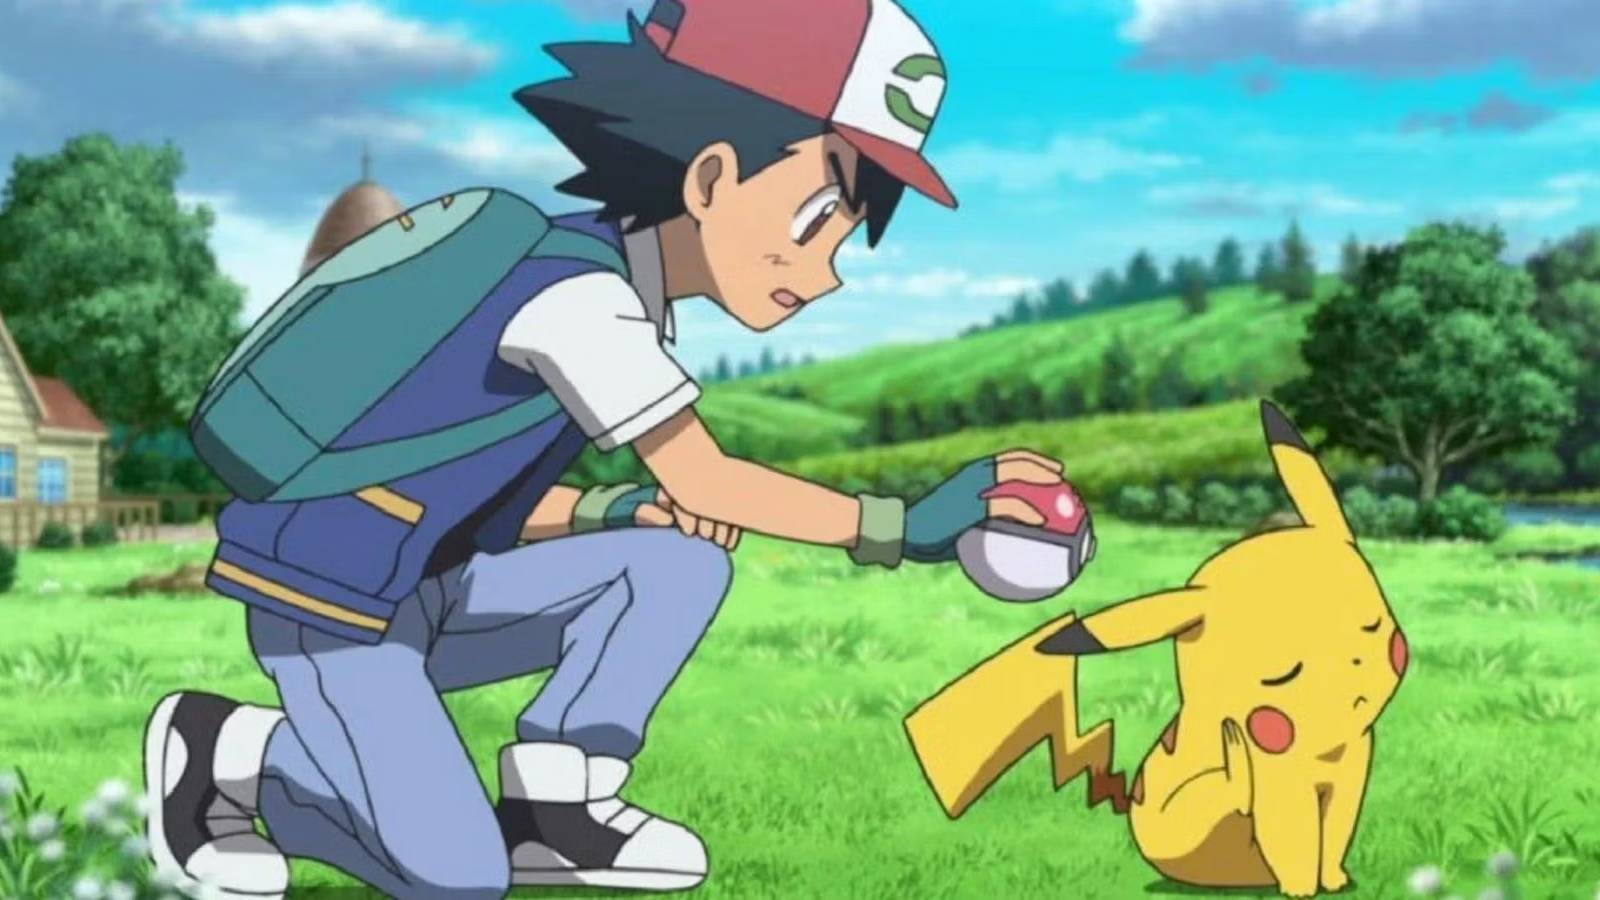 Ash tries to get Pikachu into a Poke Ball